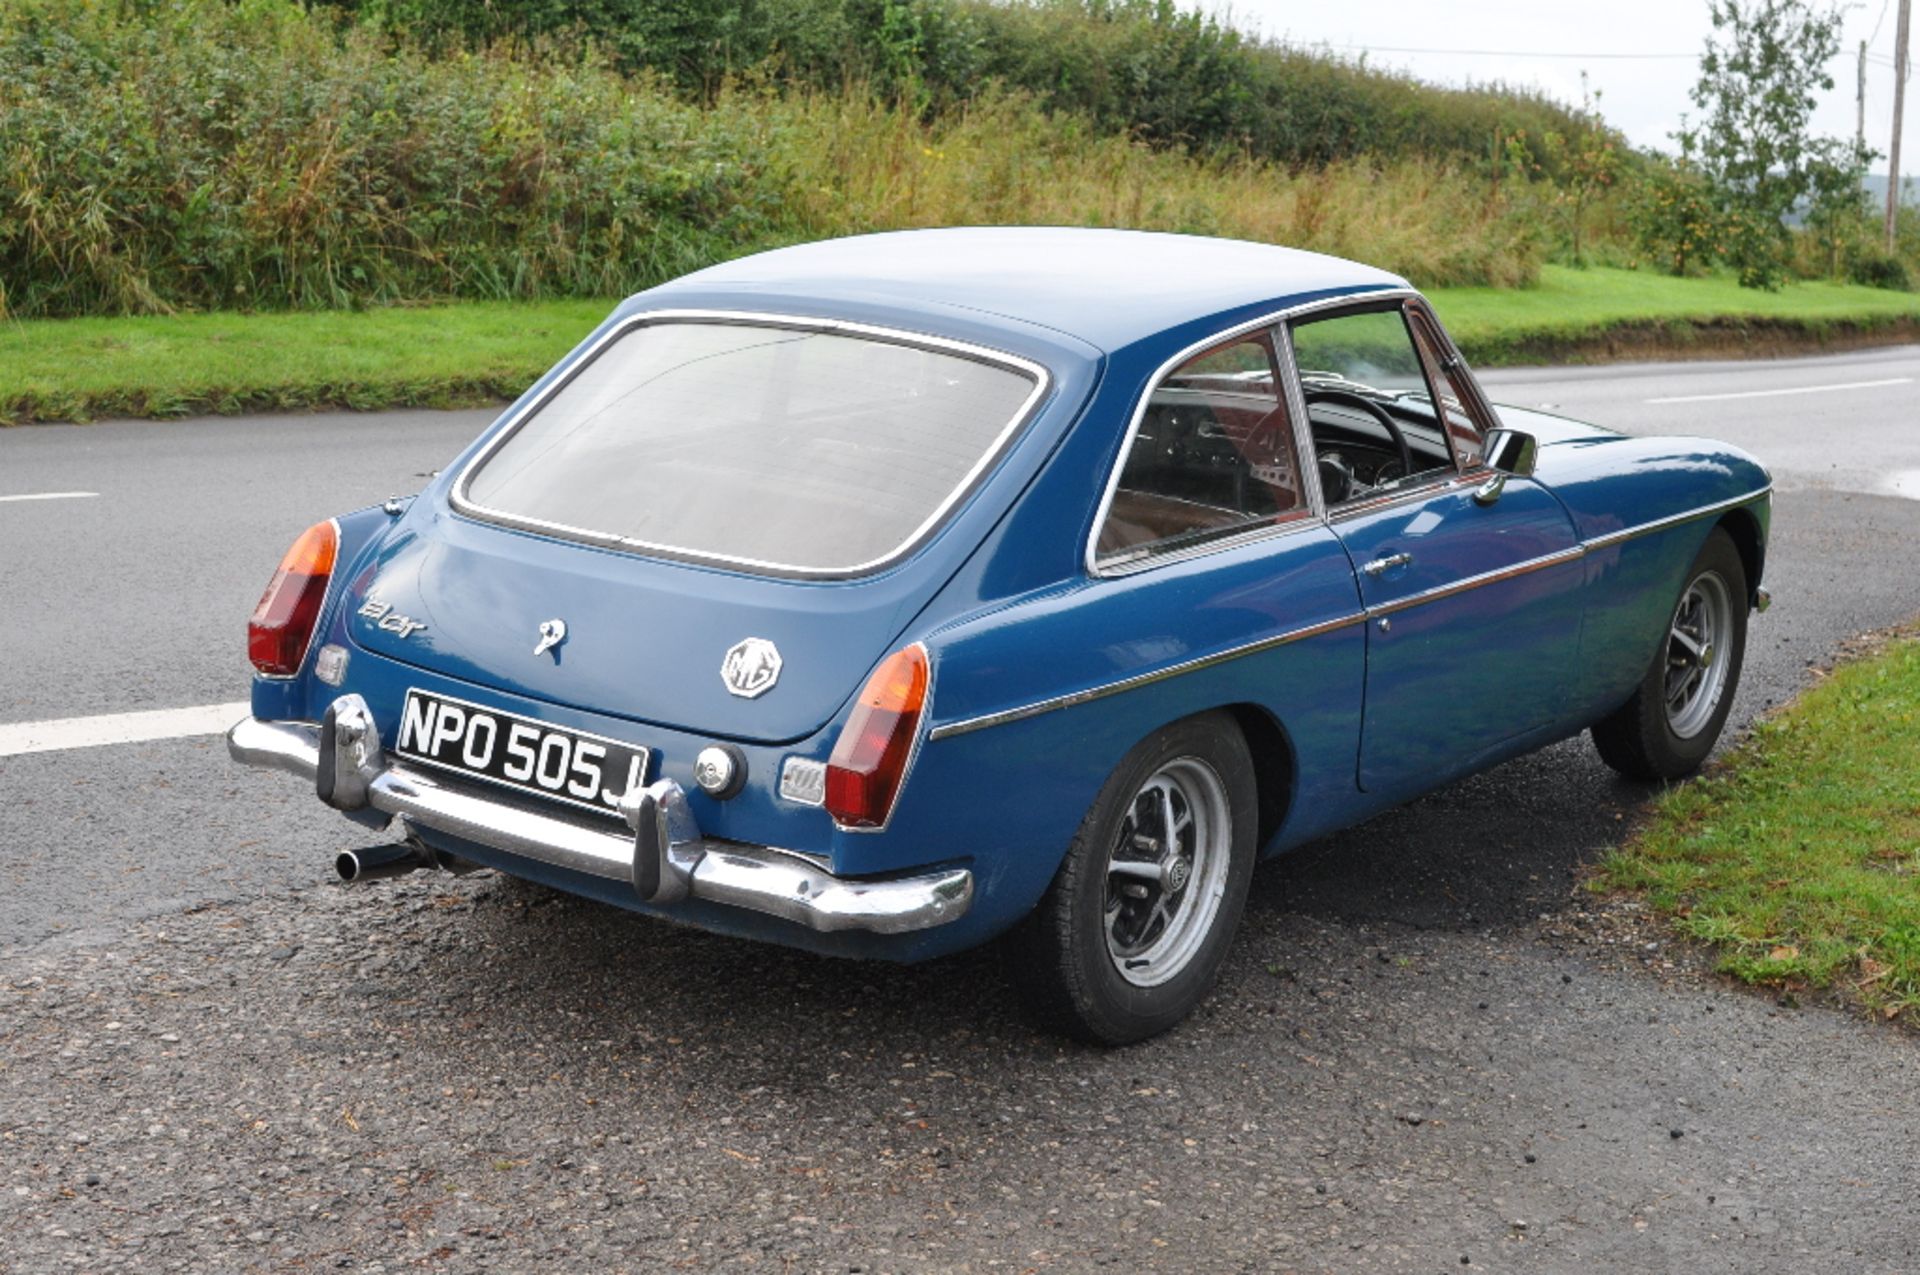 A 1971 MG B GT, registration number NPO 505J, teal blue. - Image 3 of 6